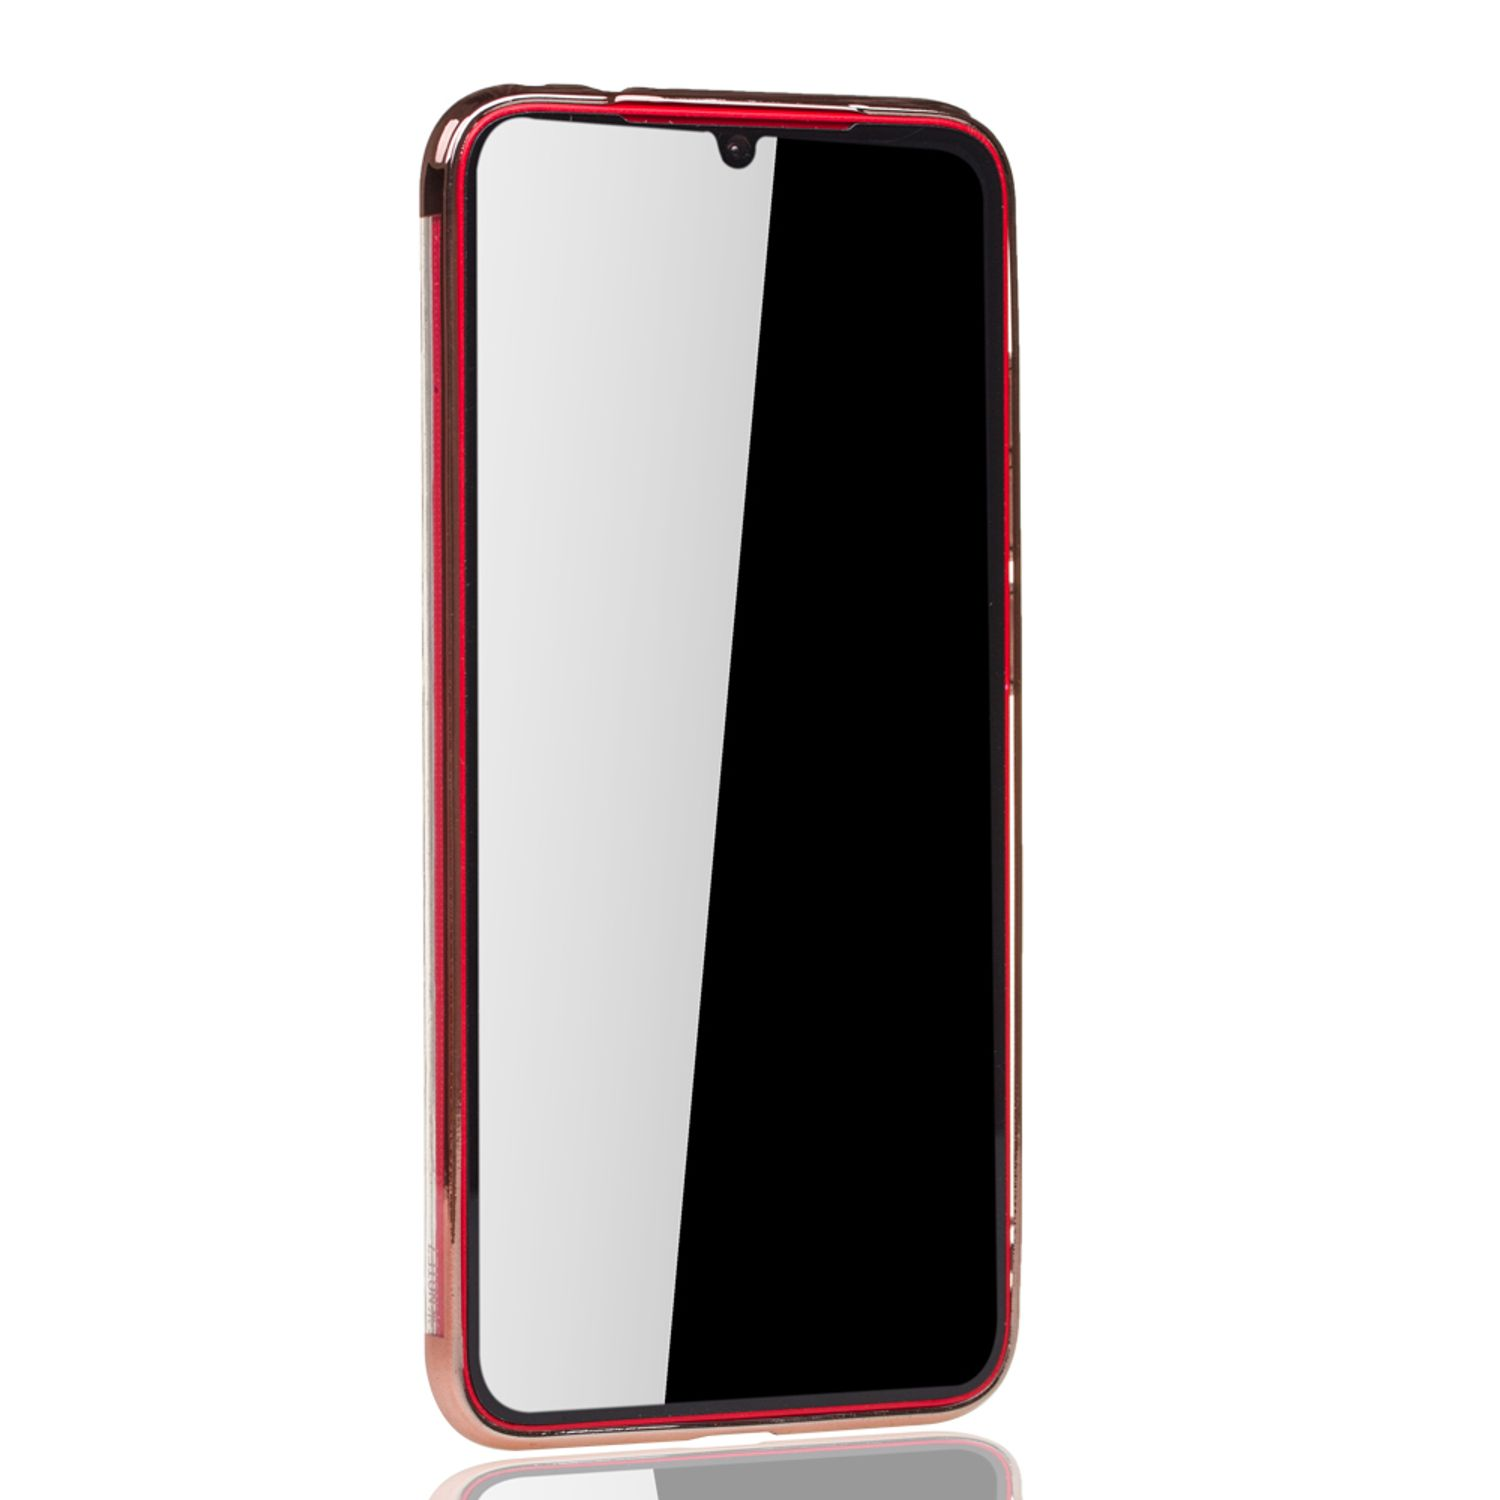 KÖNIG DESIGN Redmi Note Backcover, Xiaomi, Note 7 Pink Redmi Pro, Schutzhülle, / 7